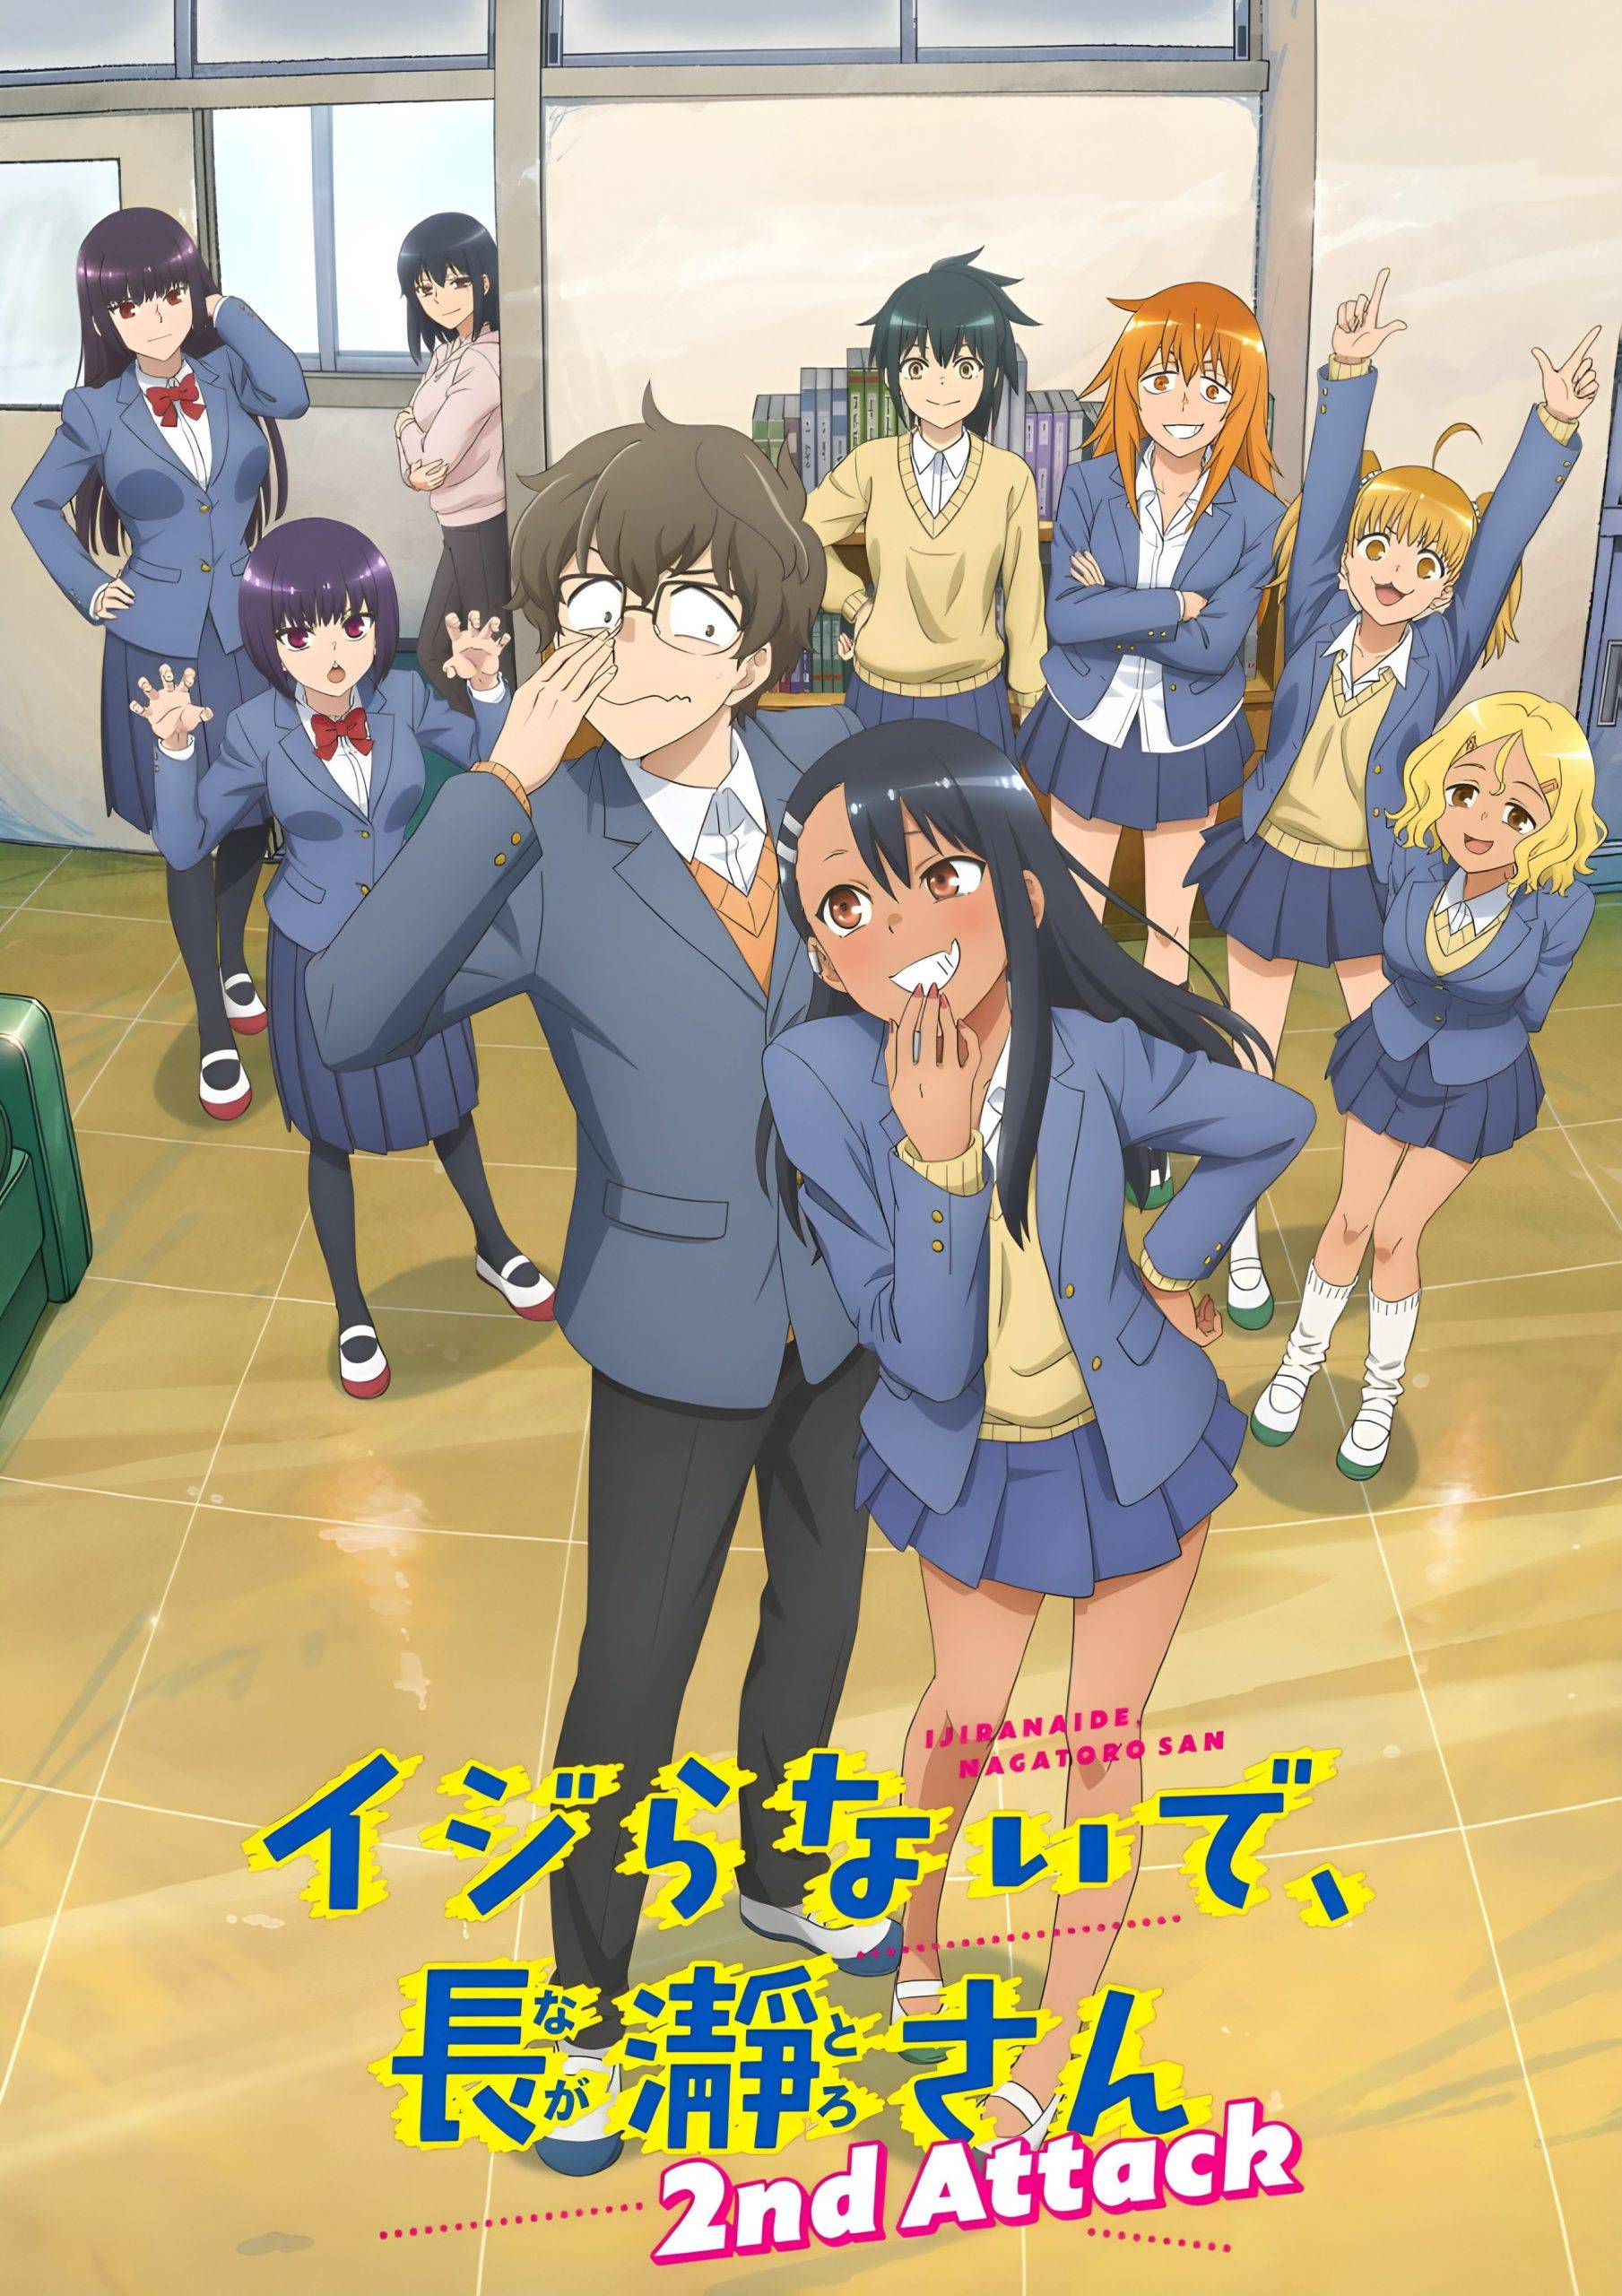 Animes dublado link no Google drive - ijiranaide nagatoro-san dublado🇧🇷  link para baixar através do Google drive